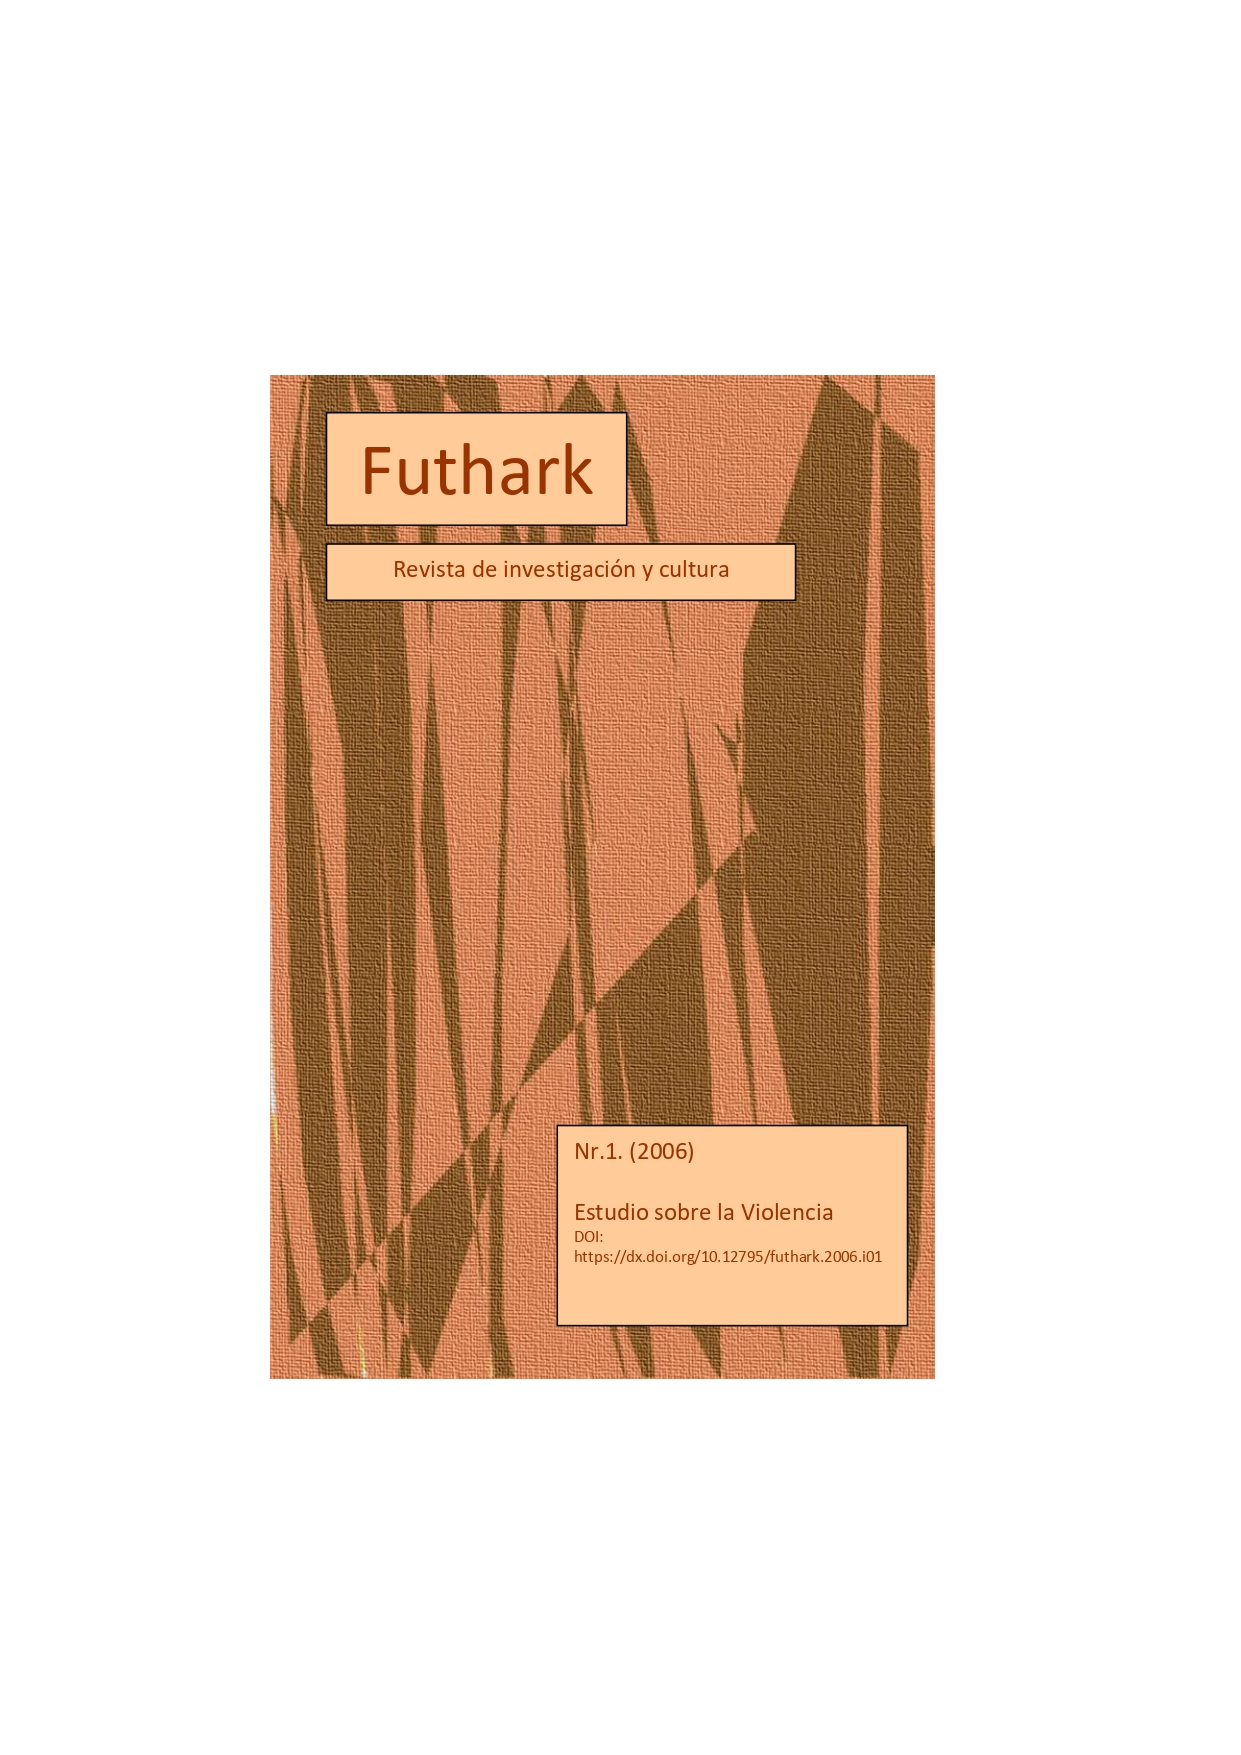 					Ver Núm. 1 (2006): Futhark
				